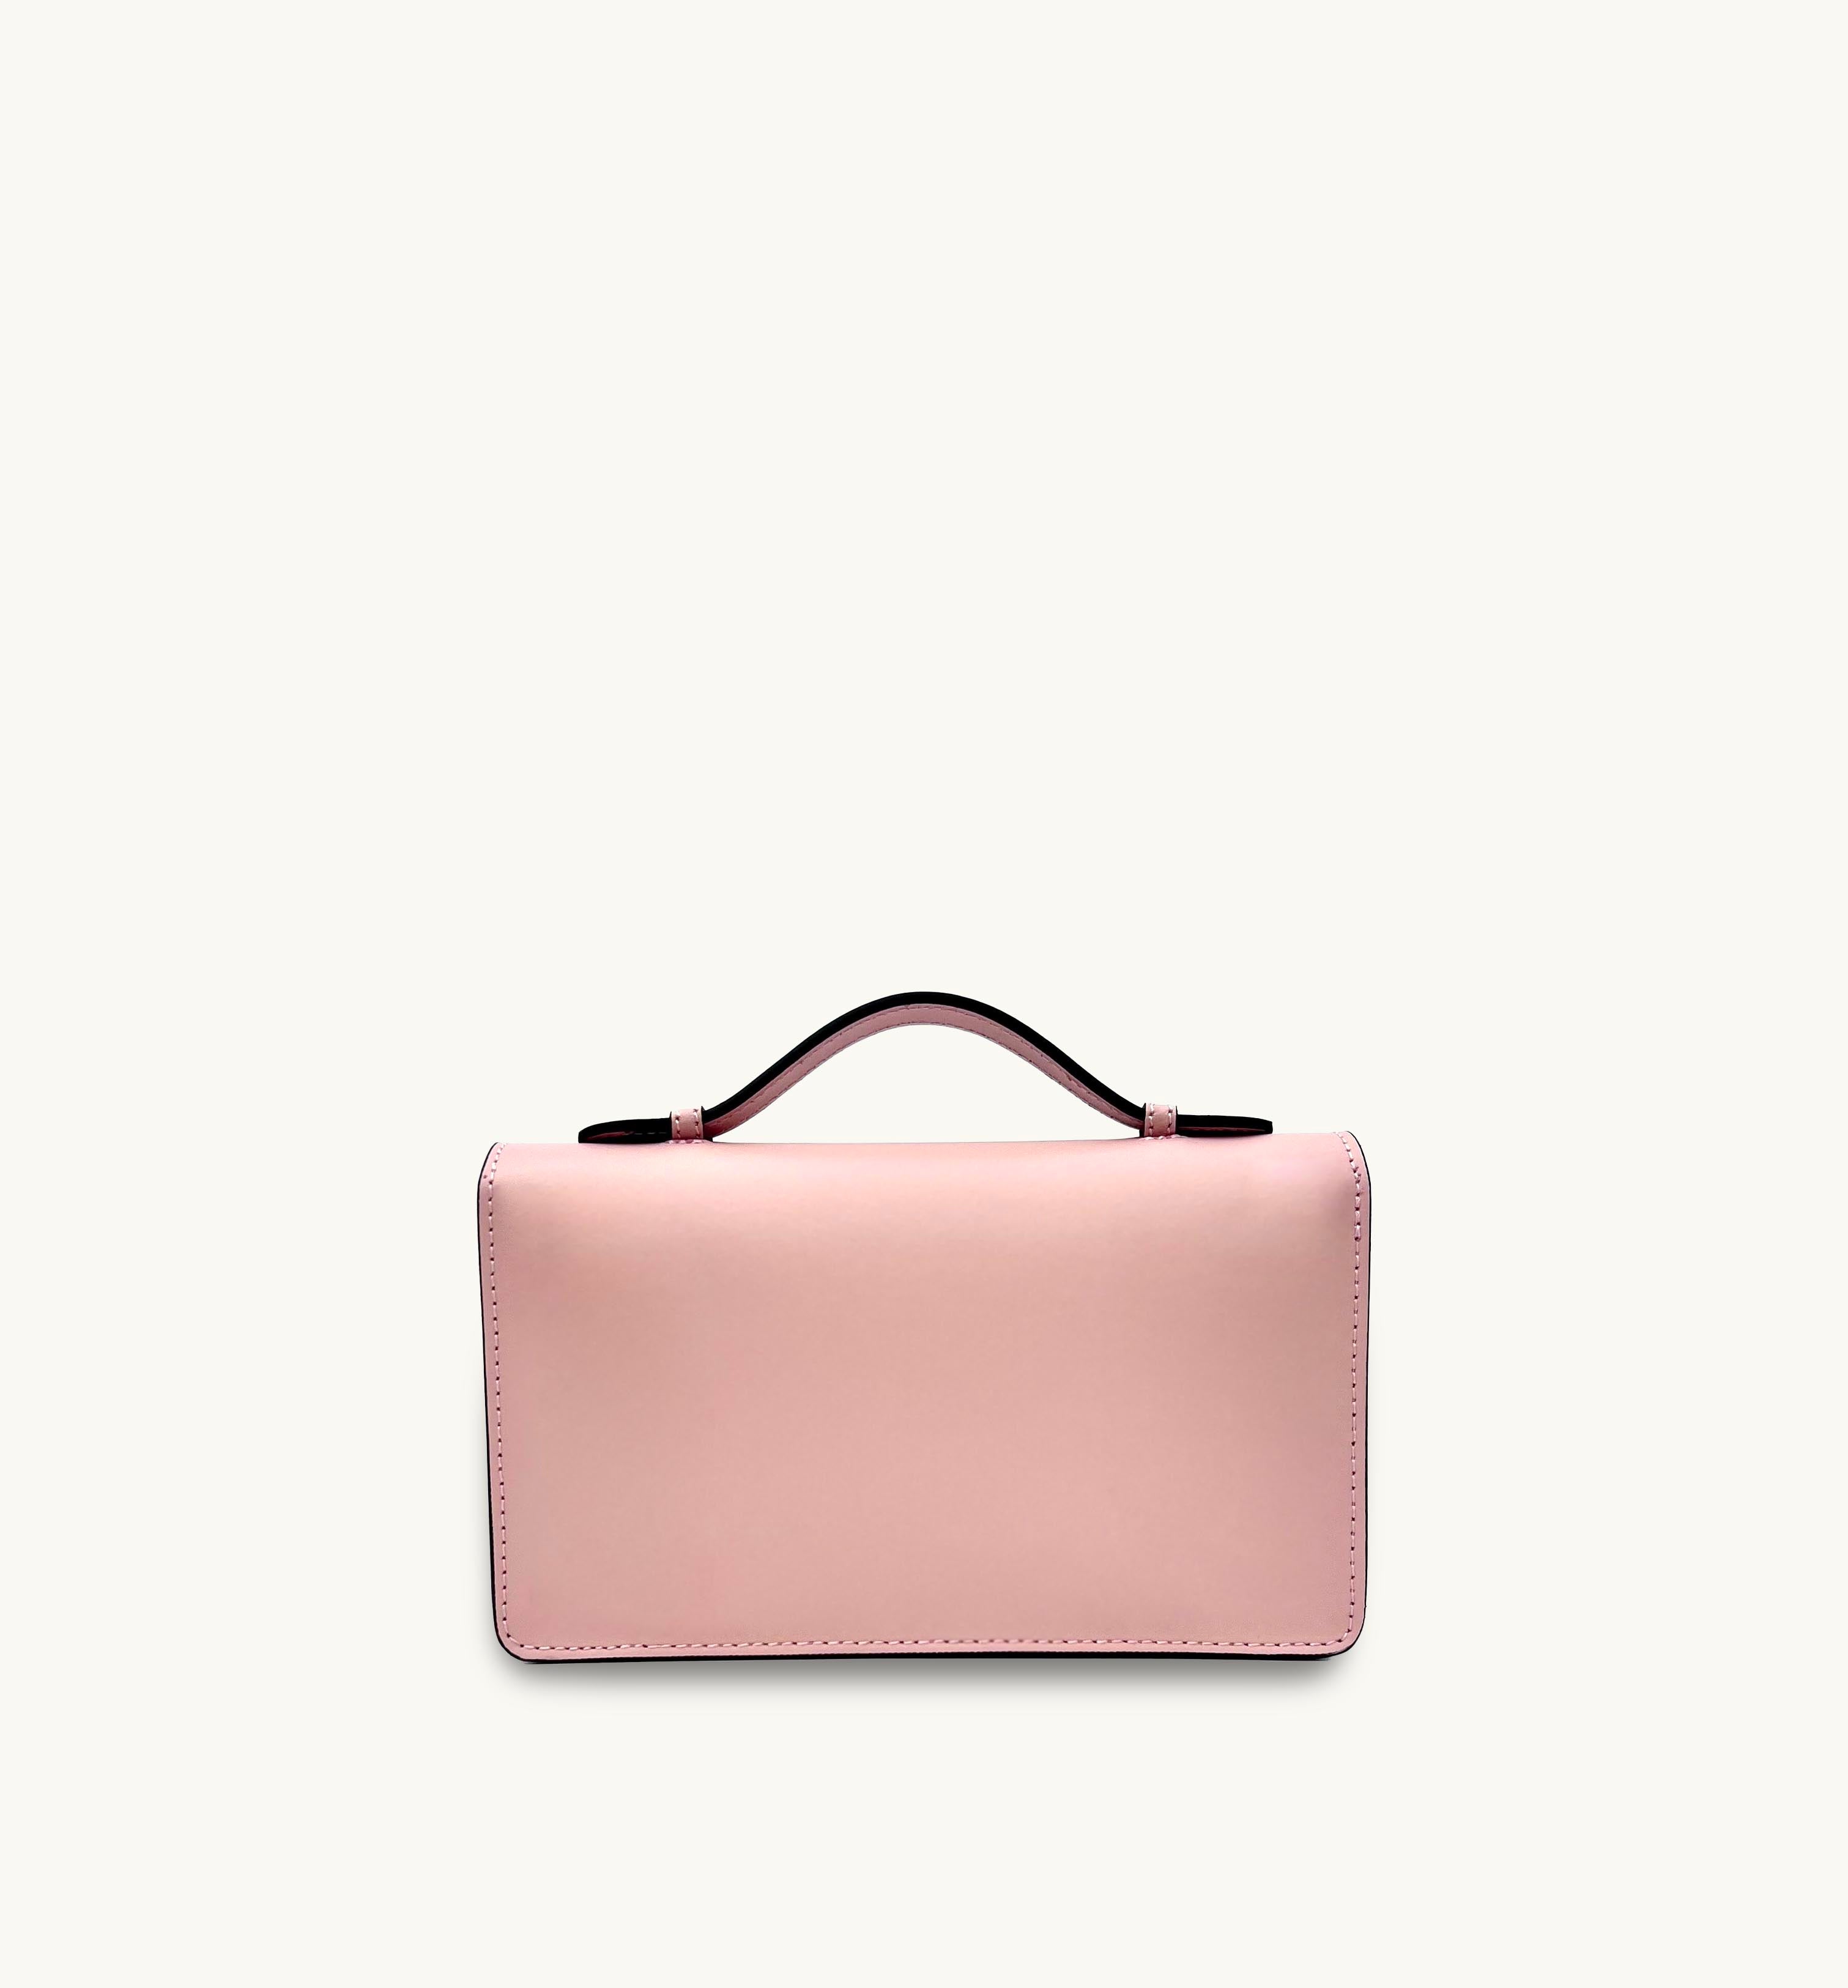 The Amelia Baby Pink Leather Bag